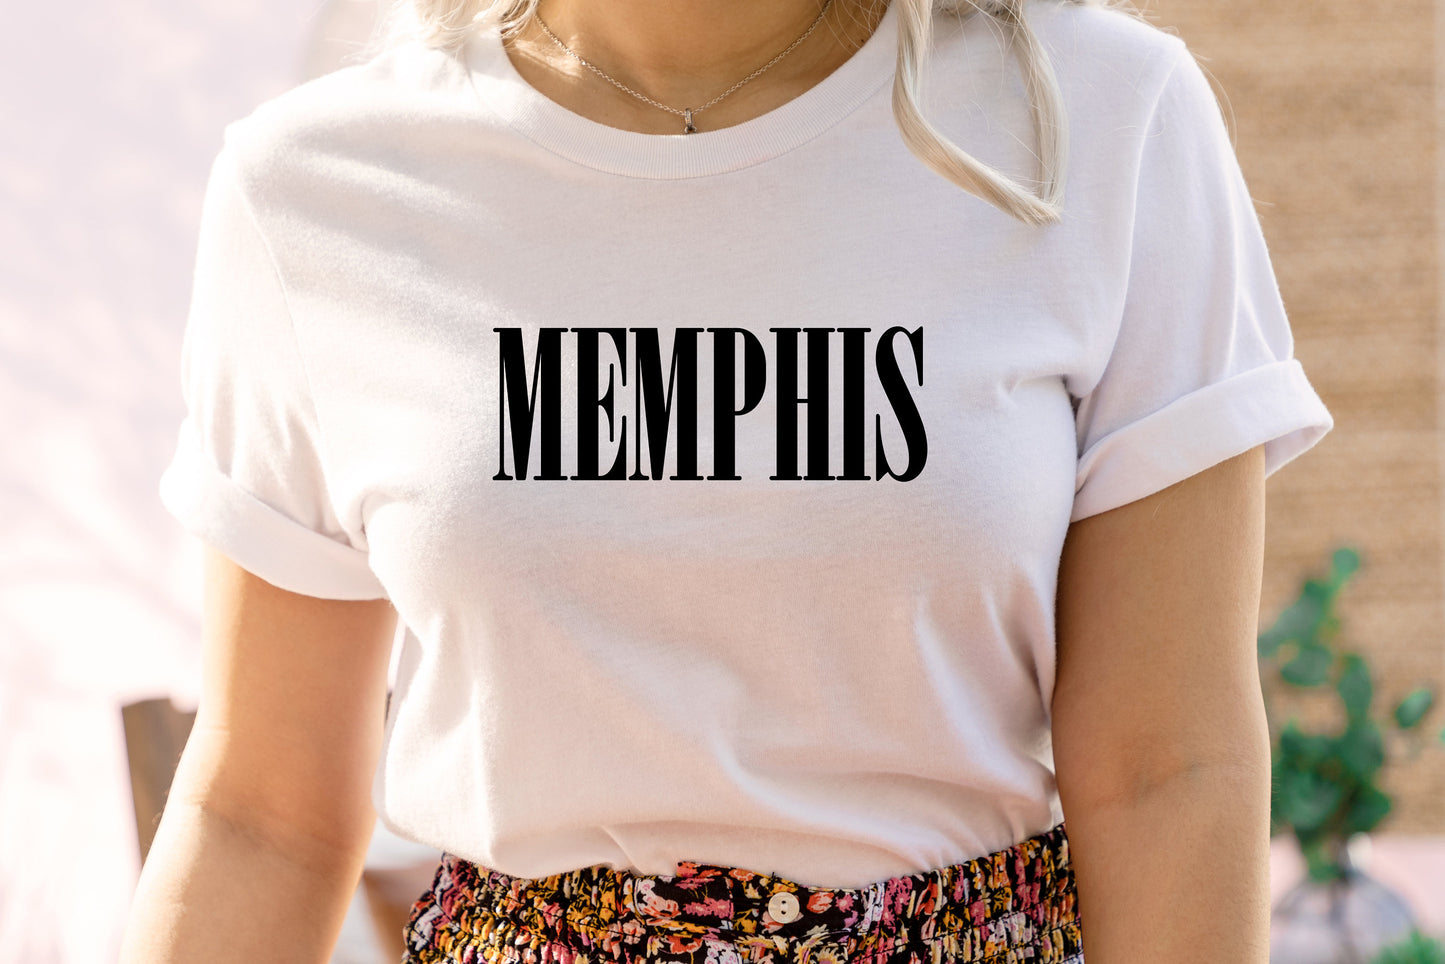 Memphis SVG